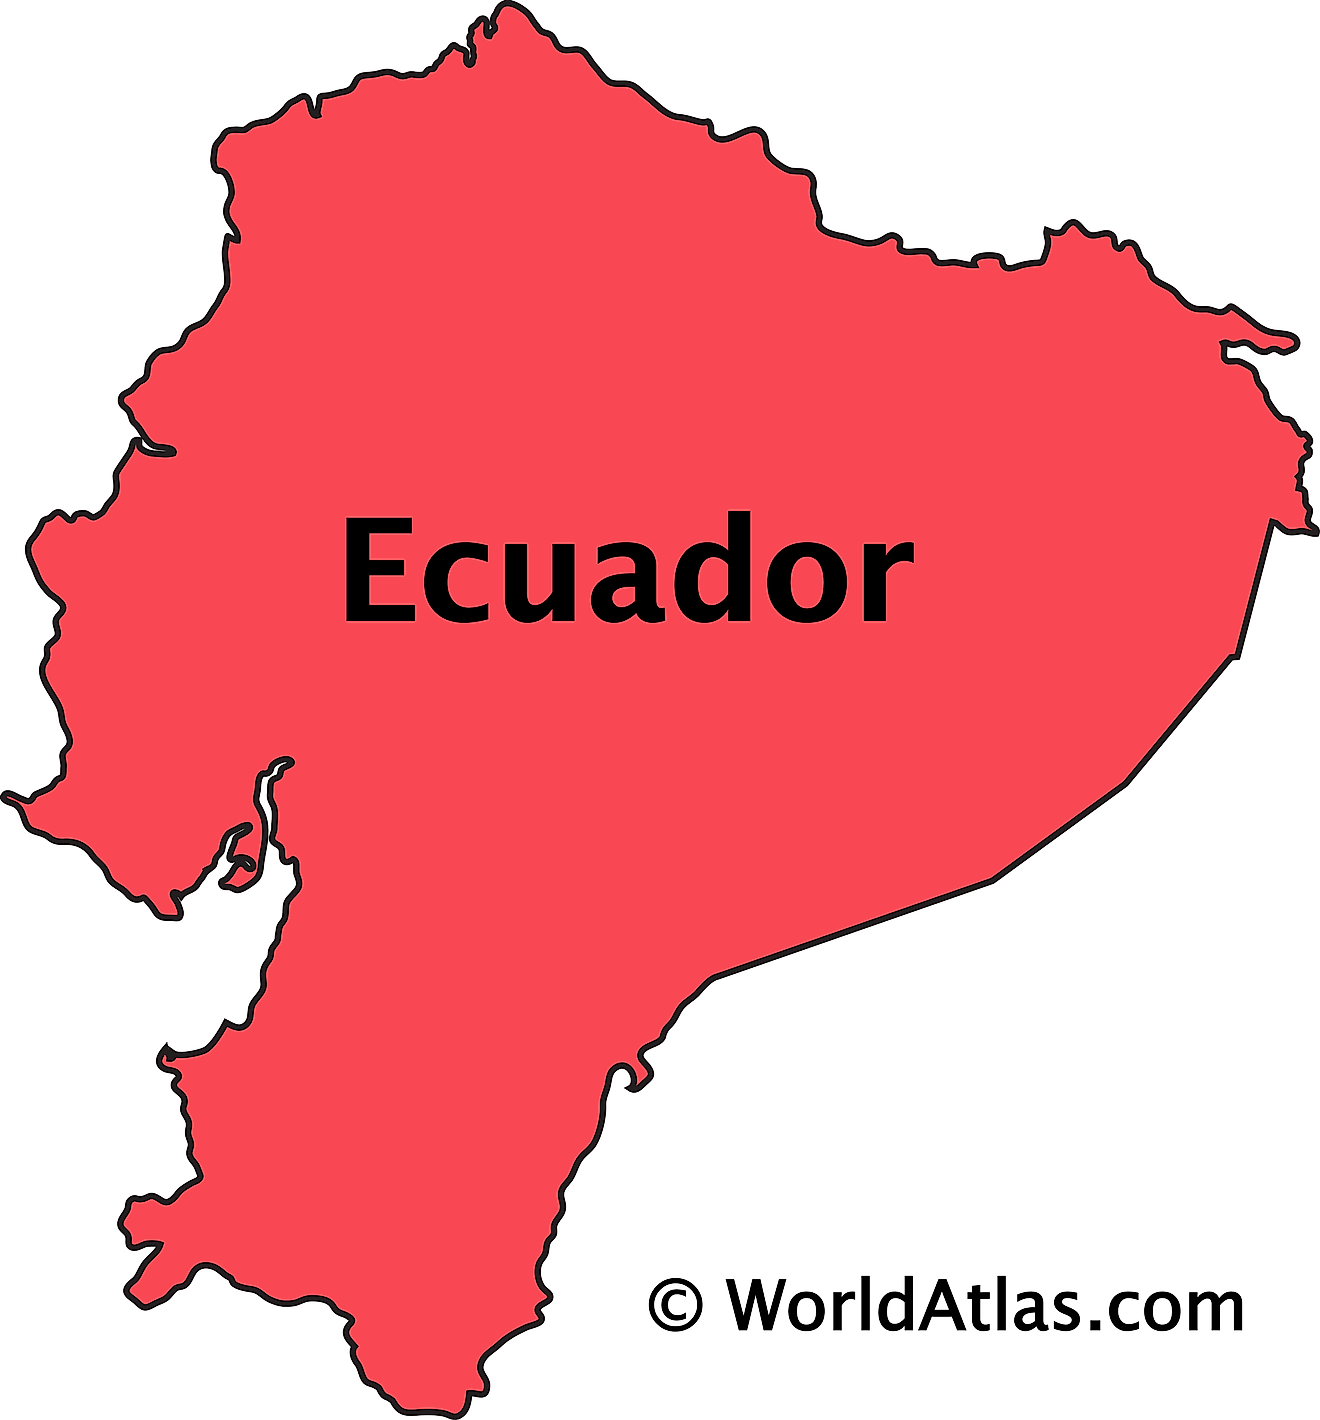 Ecuador Map With Cities